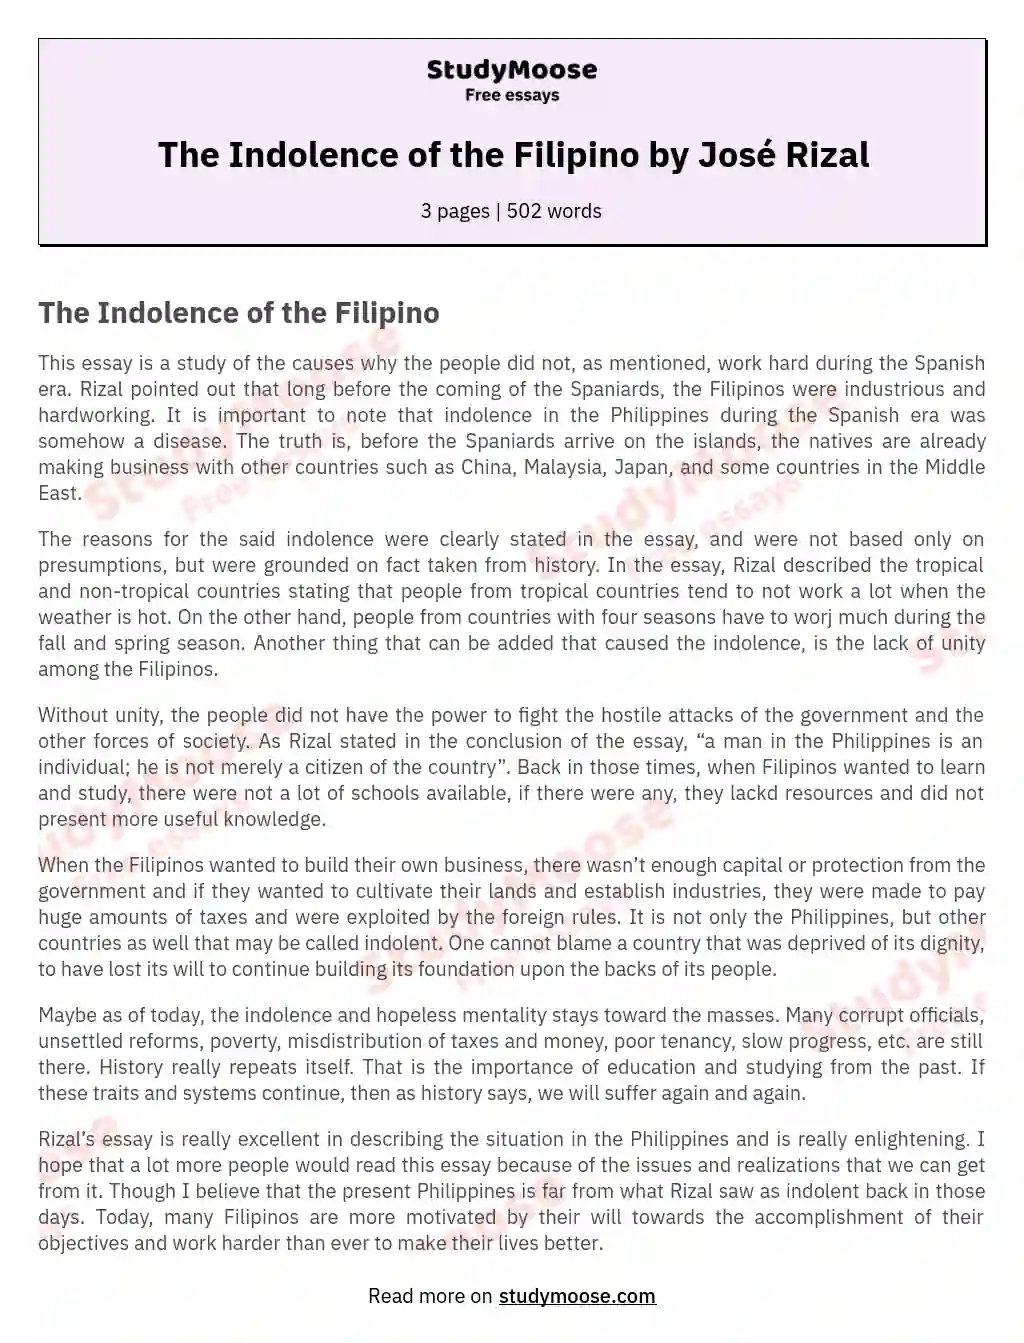 The Indolence of the Filipino by José Rizal essay